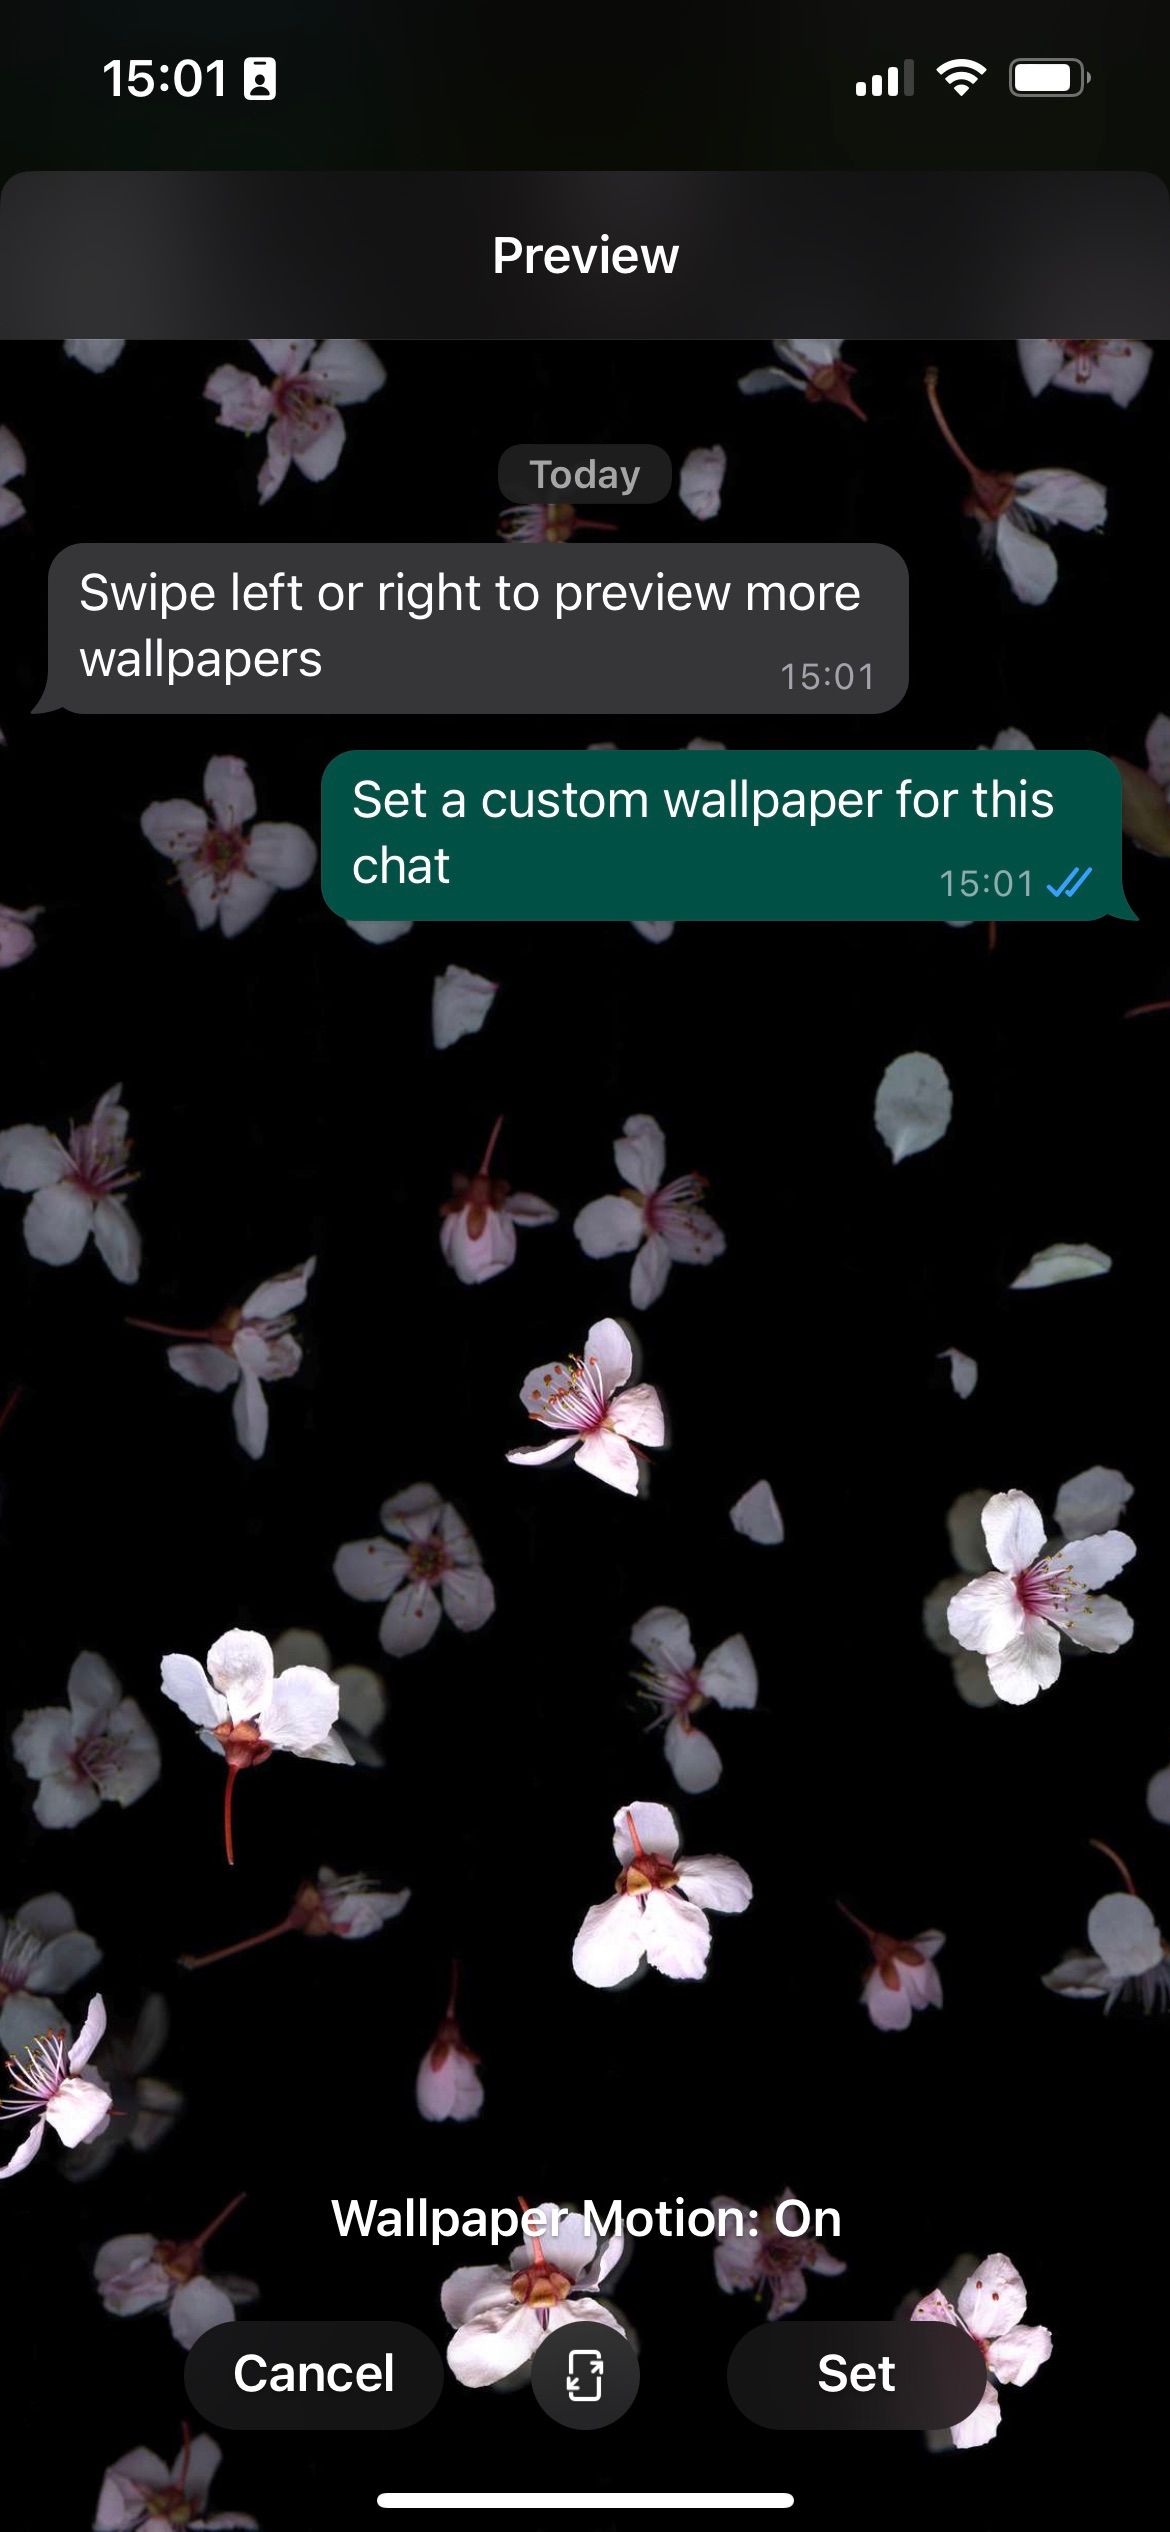 Setting up a custom wallpeper on WhatsApp